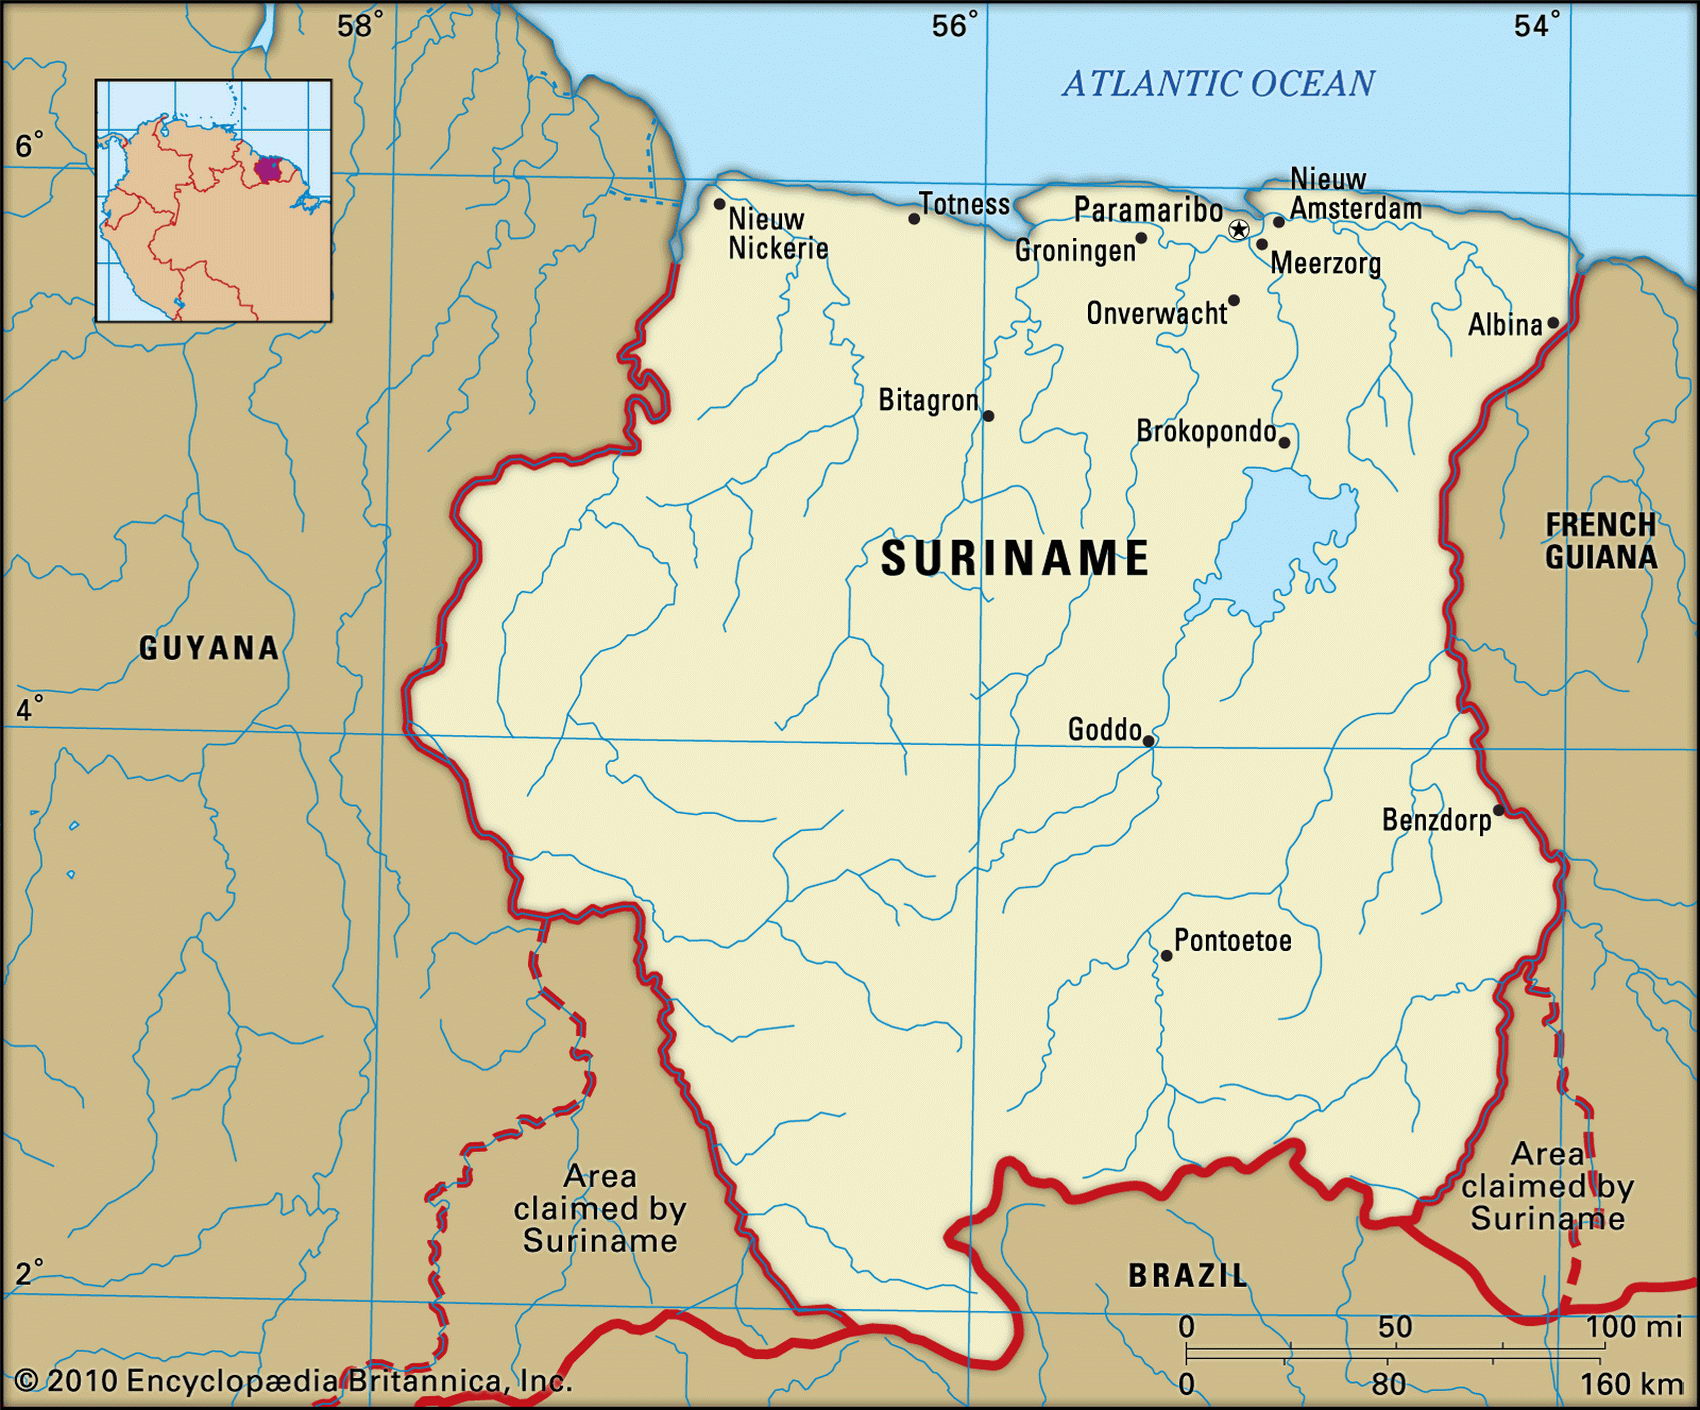 https://map-rus.com/atlas/images/Suriname.jpg